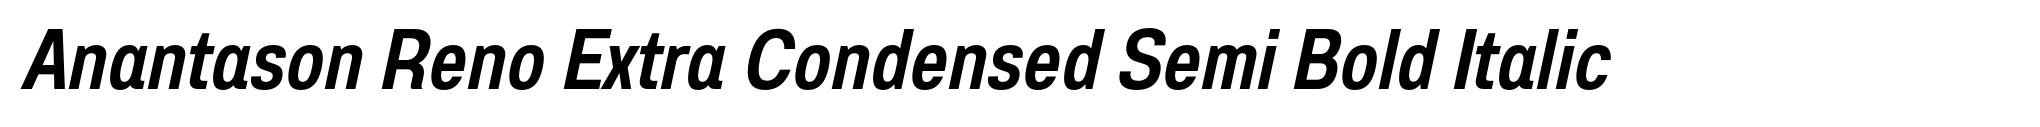 Anantason Reno Extra Condensed Semi Bold Italic image